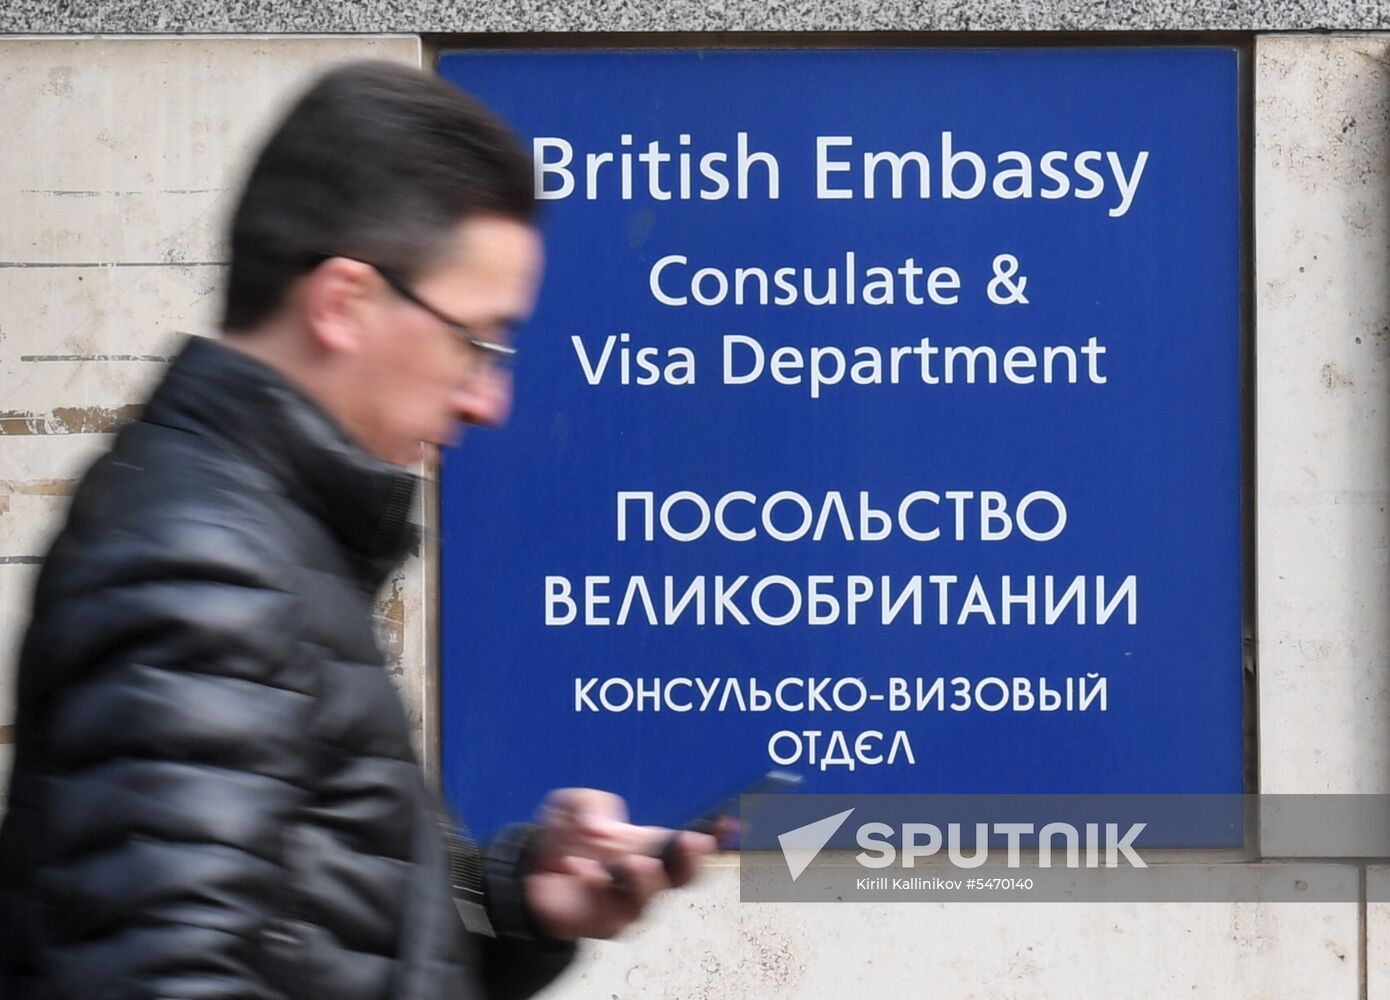 Viktoria Skripal at the British Embassy in Moscow